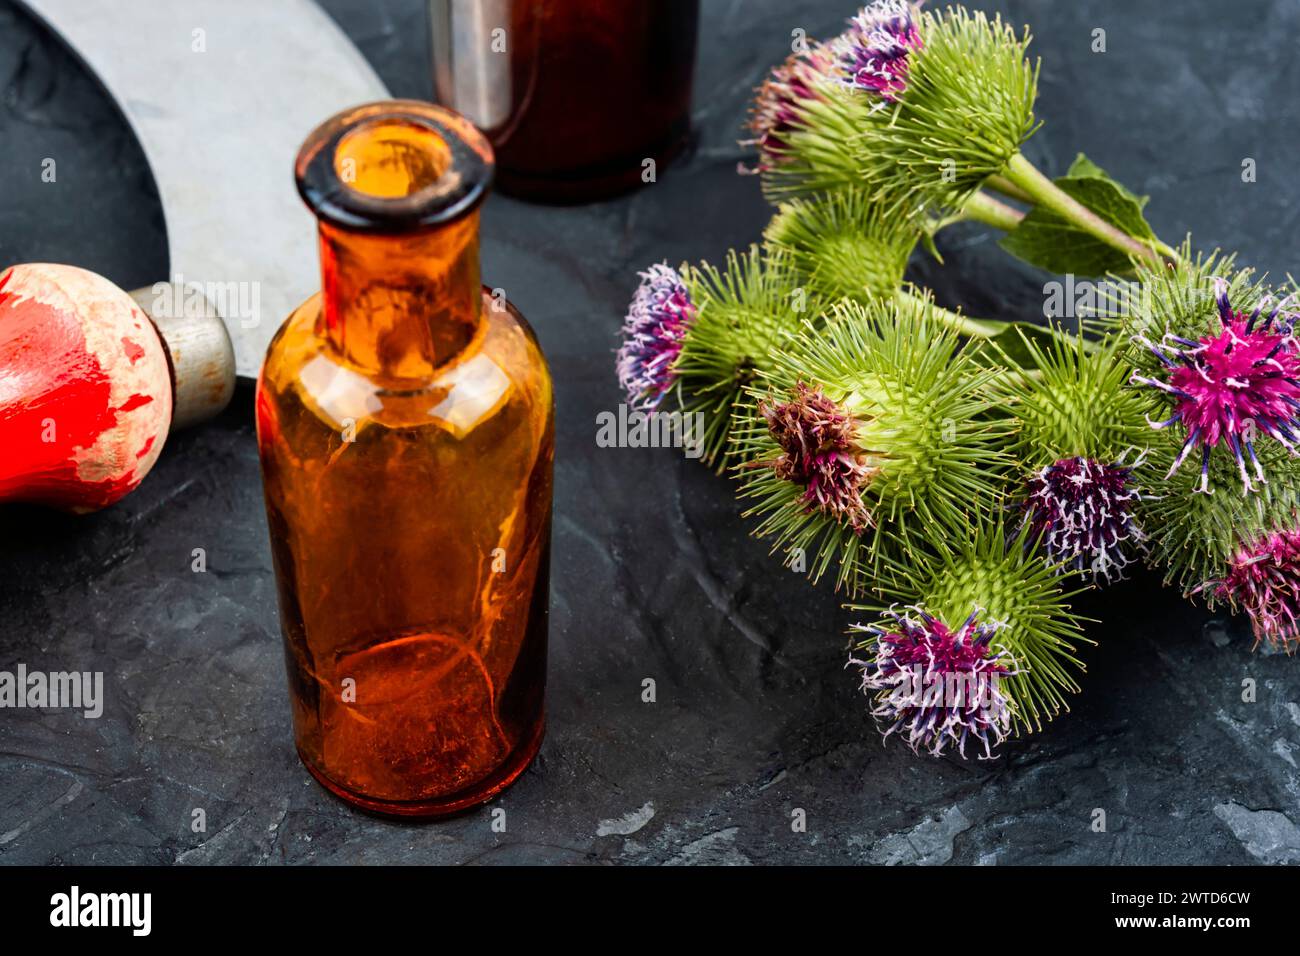 Healing plant burdock or Silybum marianum, herbal Medicine Stock Photo